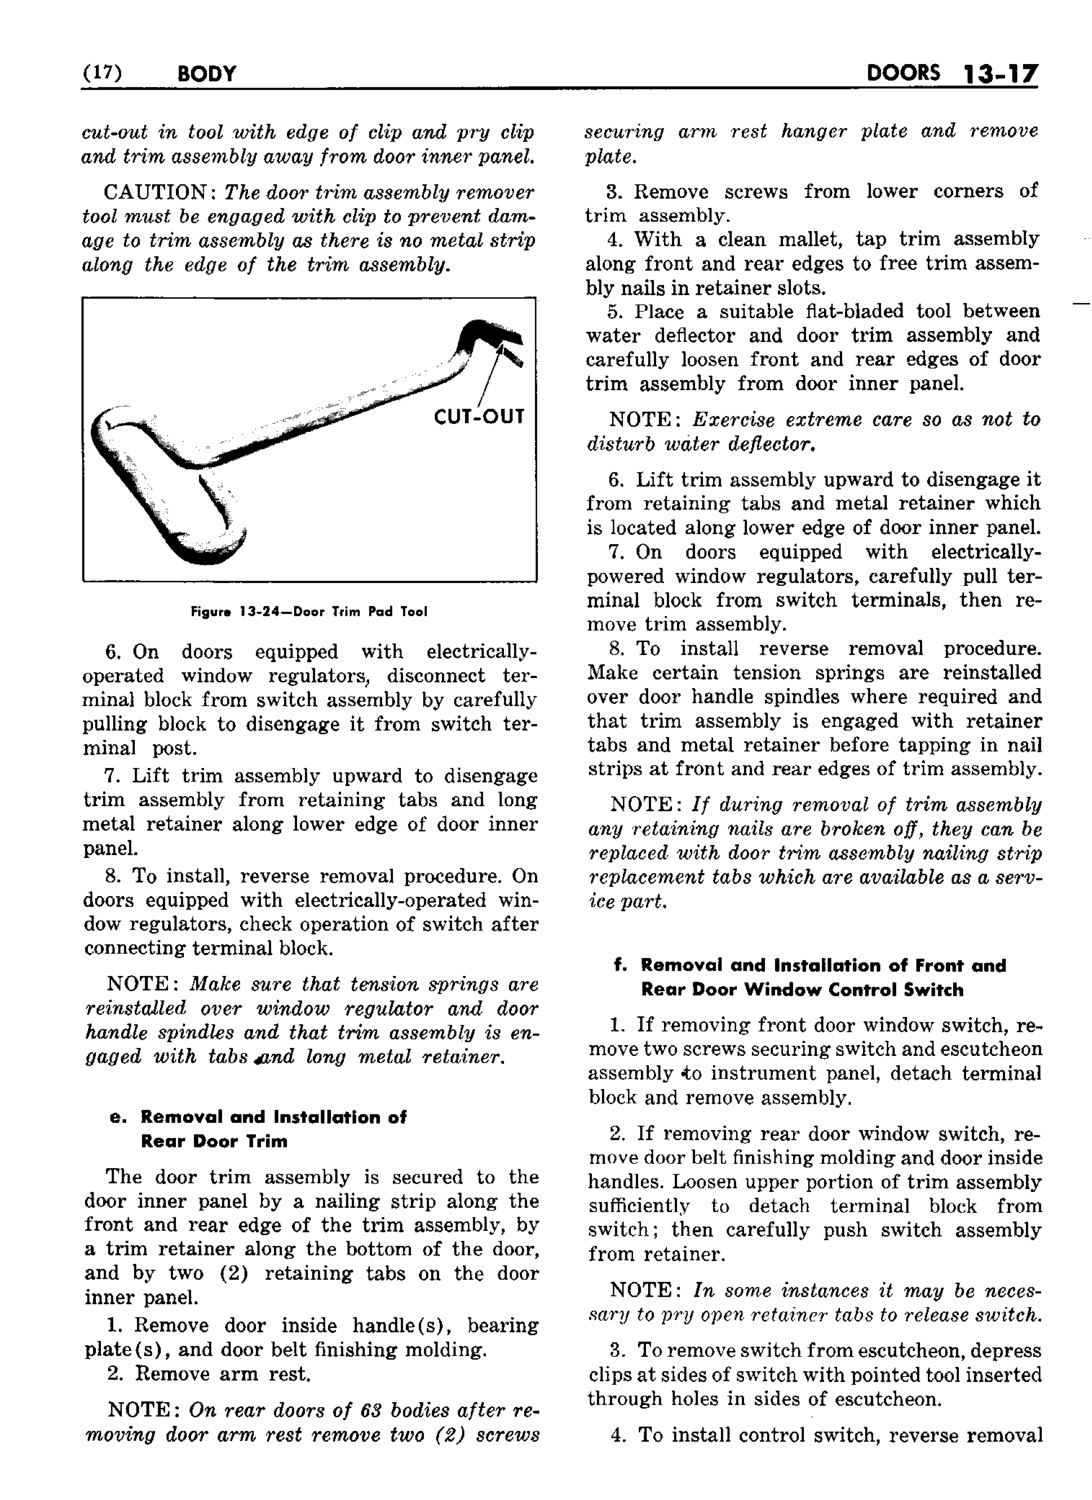 n_1958 Buick Body Service Manual-018-018.jpg